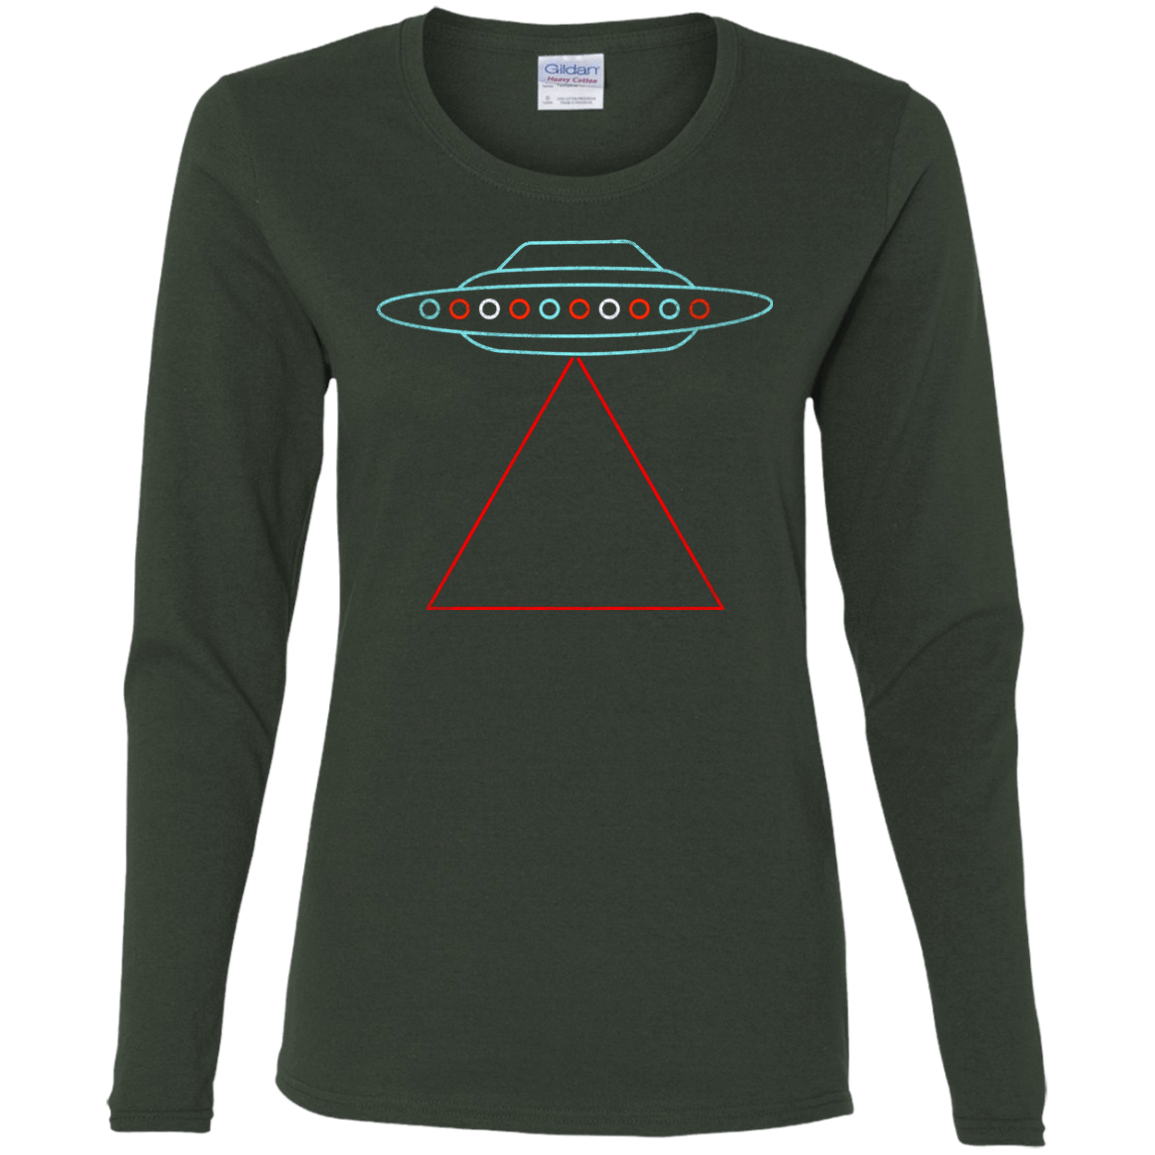 T-Shirts Forest / S UFO Tri Women's Long Sleeve T-Shirt